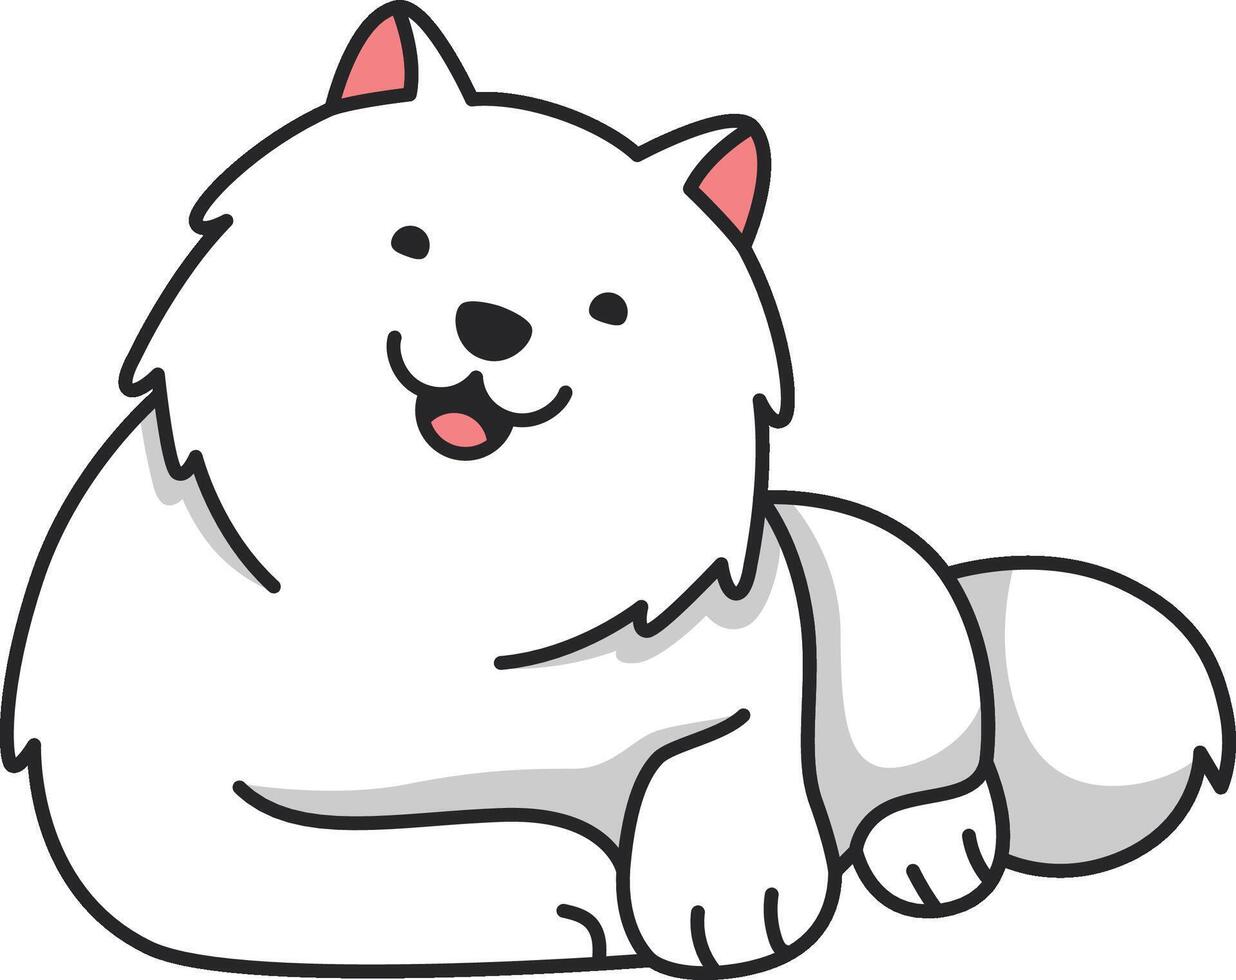 Cute Samoyed dog cartoon illustration vector